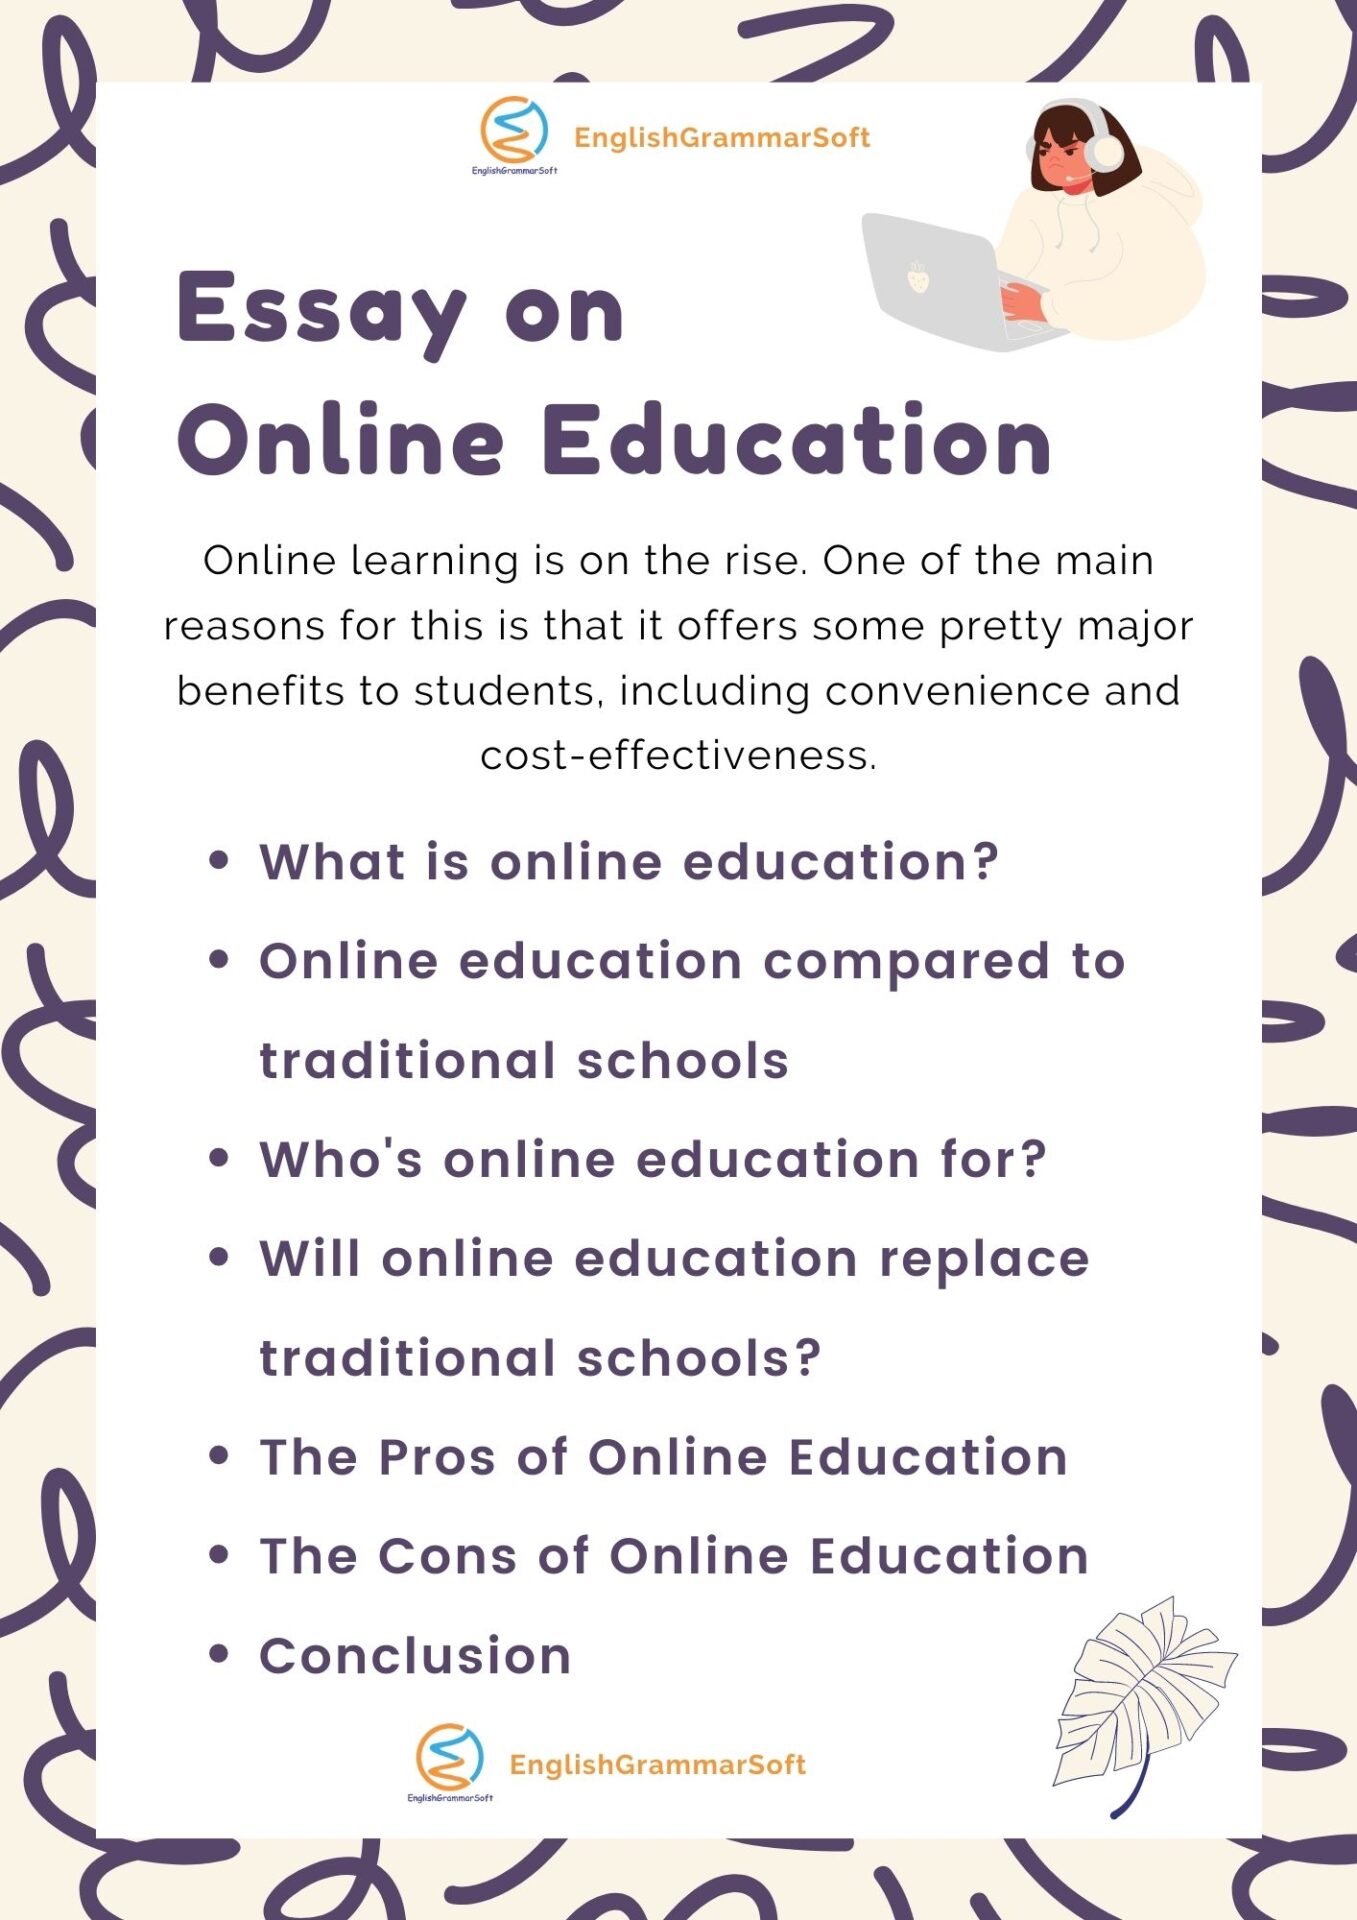 Essay on online education